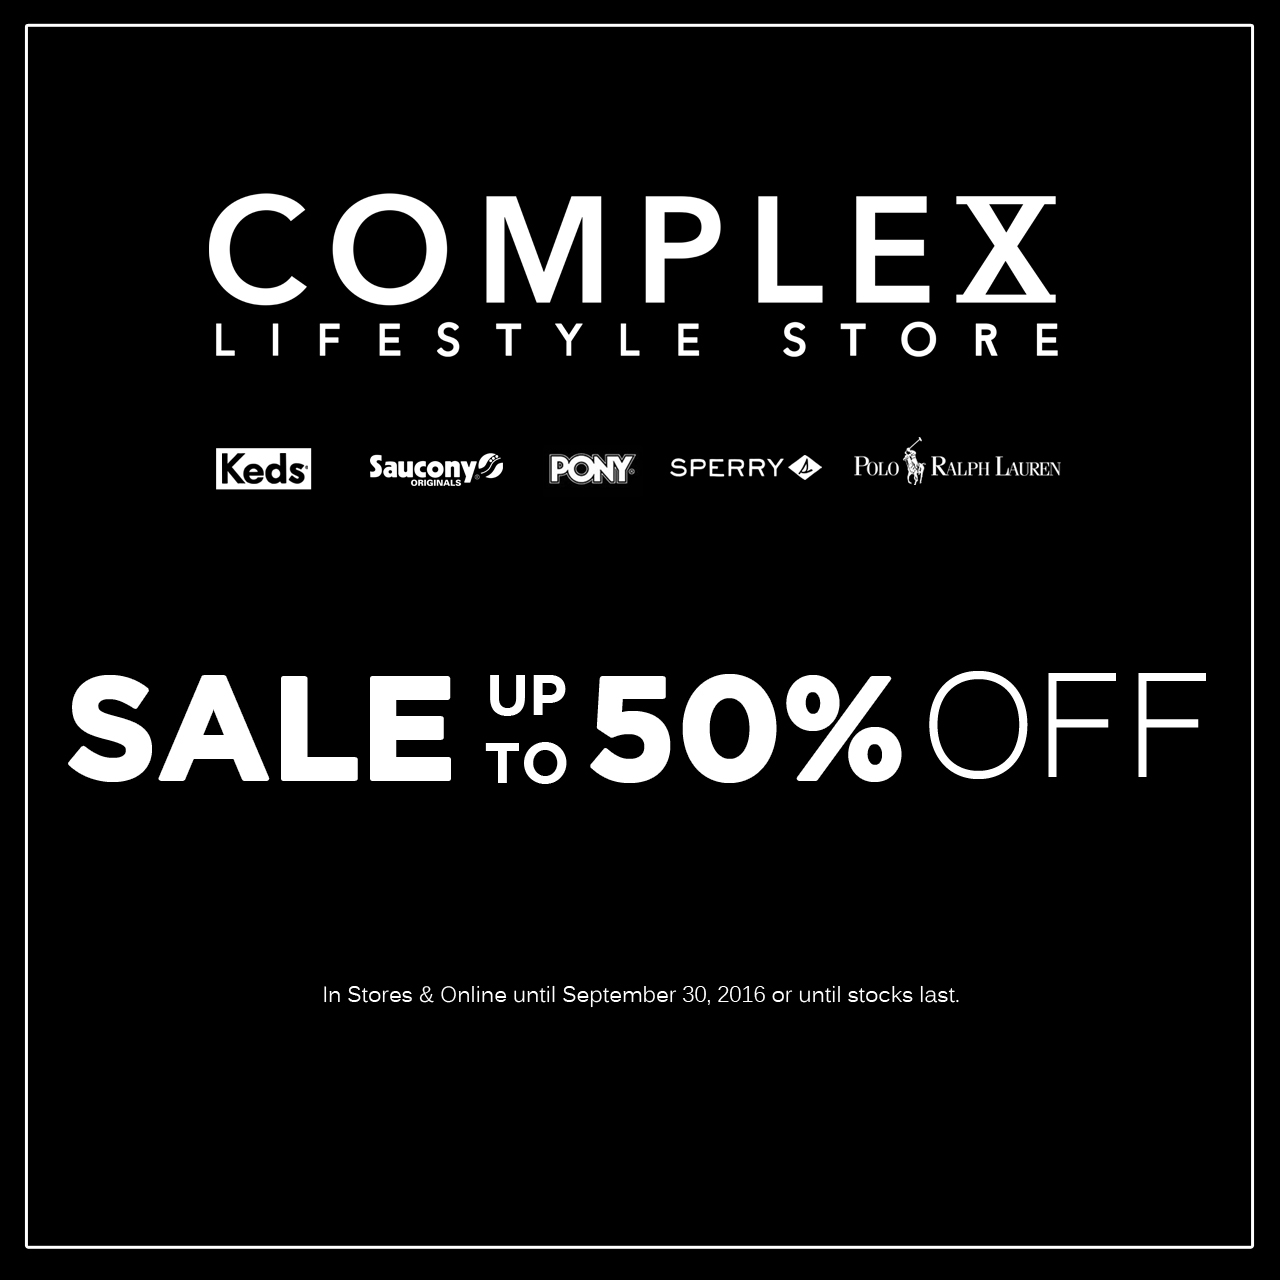 complex-lifestyle-store-end-of-season-sale-www_unlipromo_com